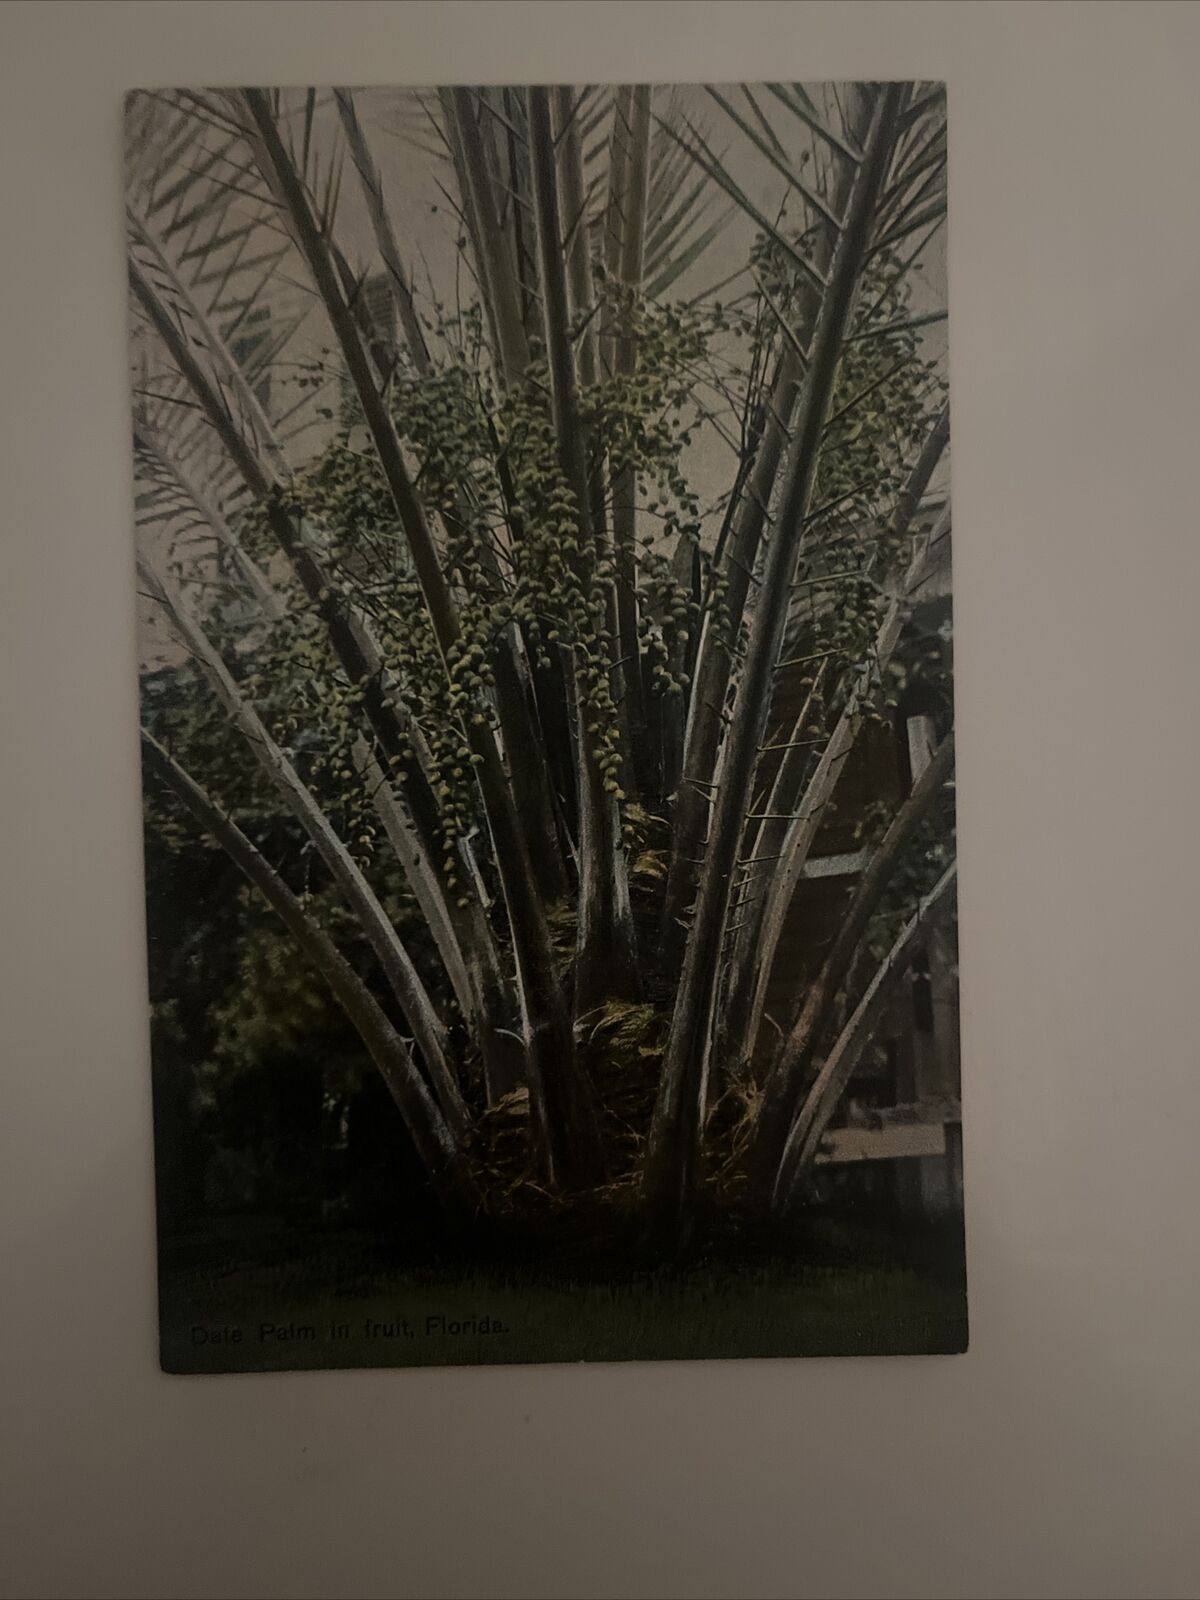 Tree postcard Palm Trees Date Palm in fruit Florida FL Vintage